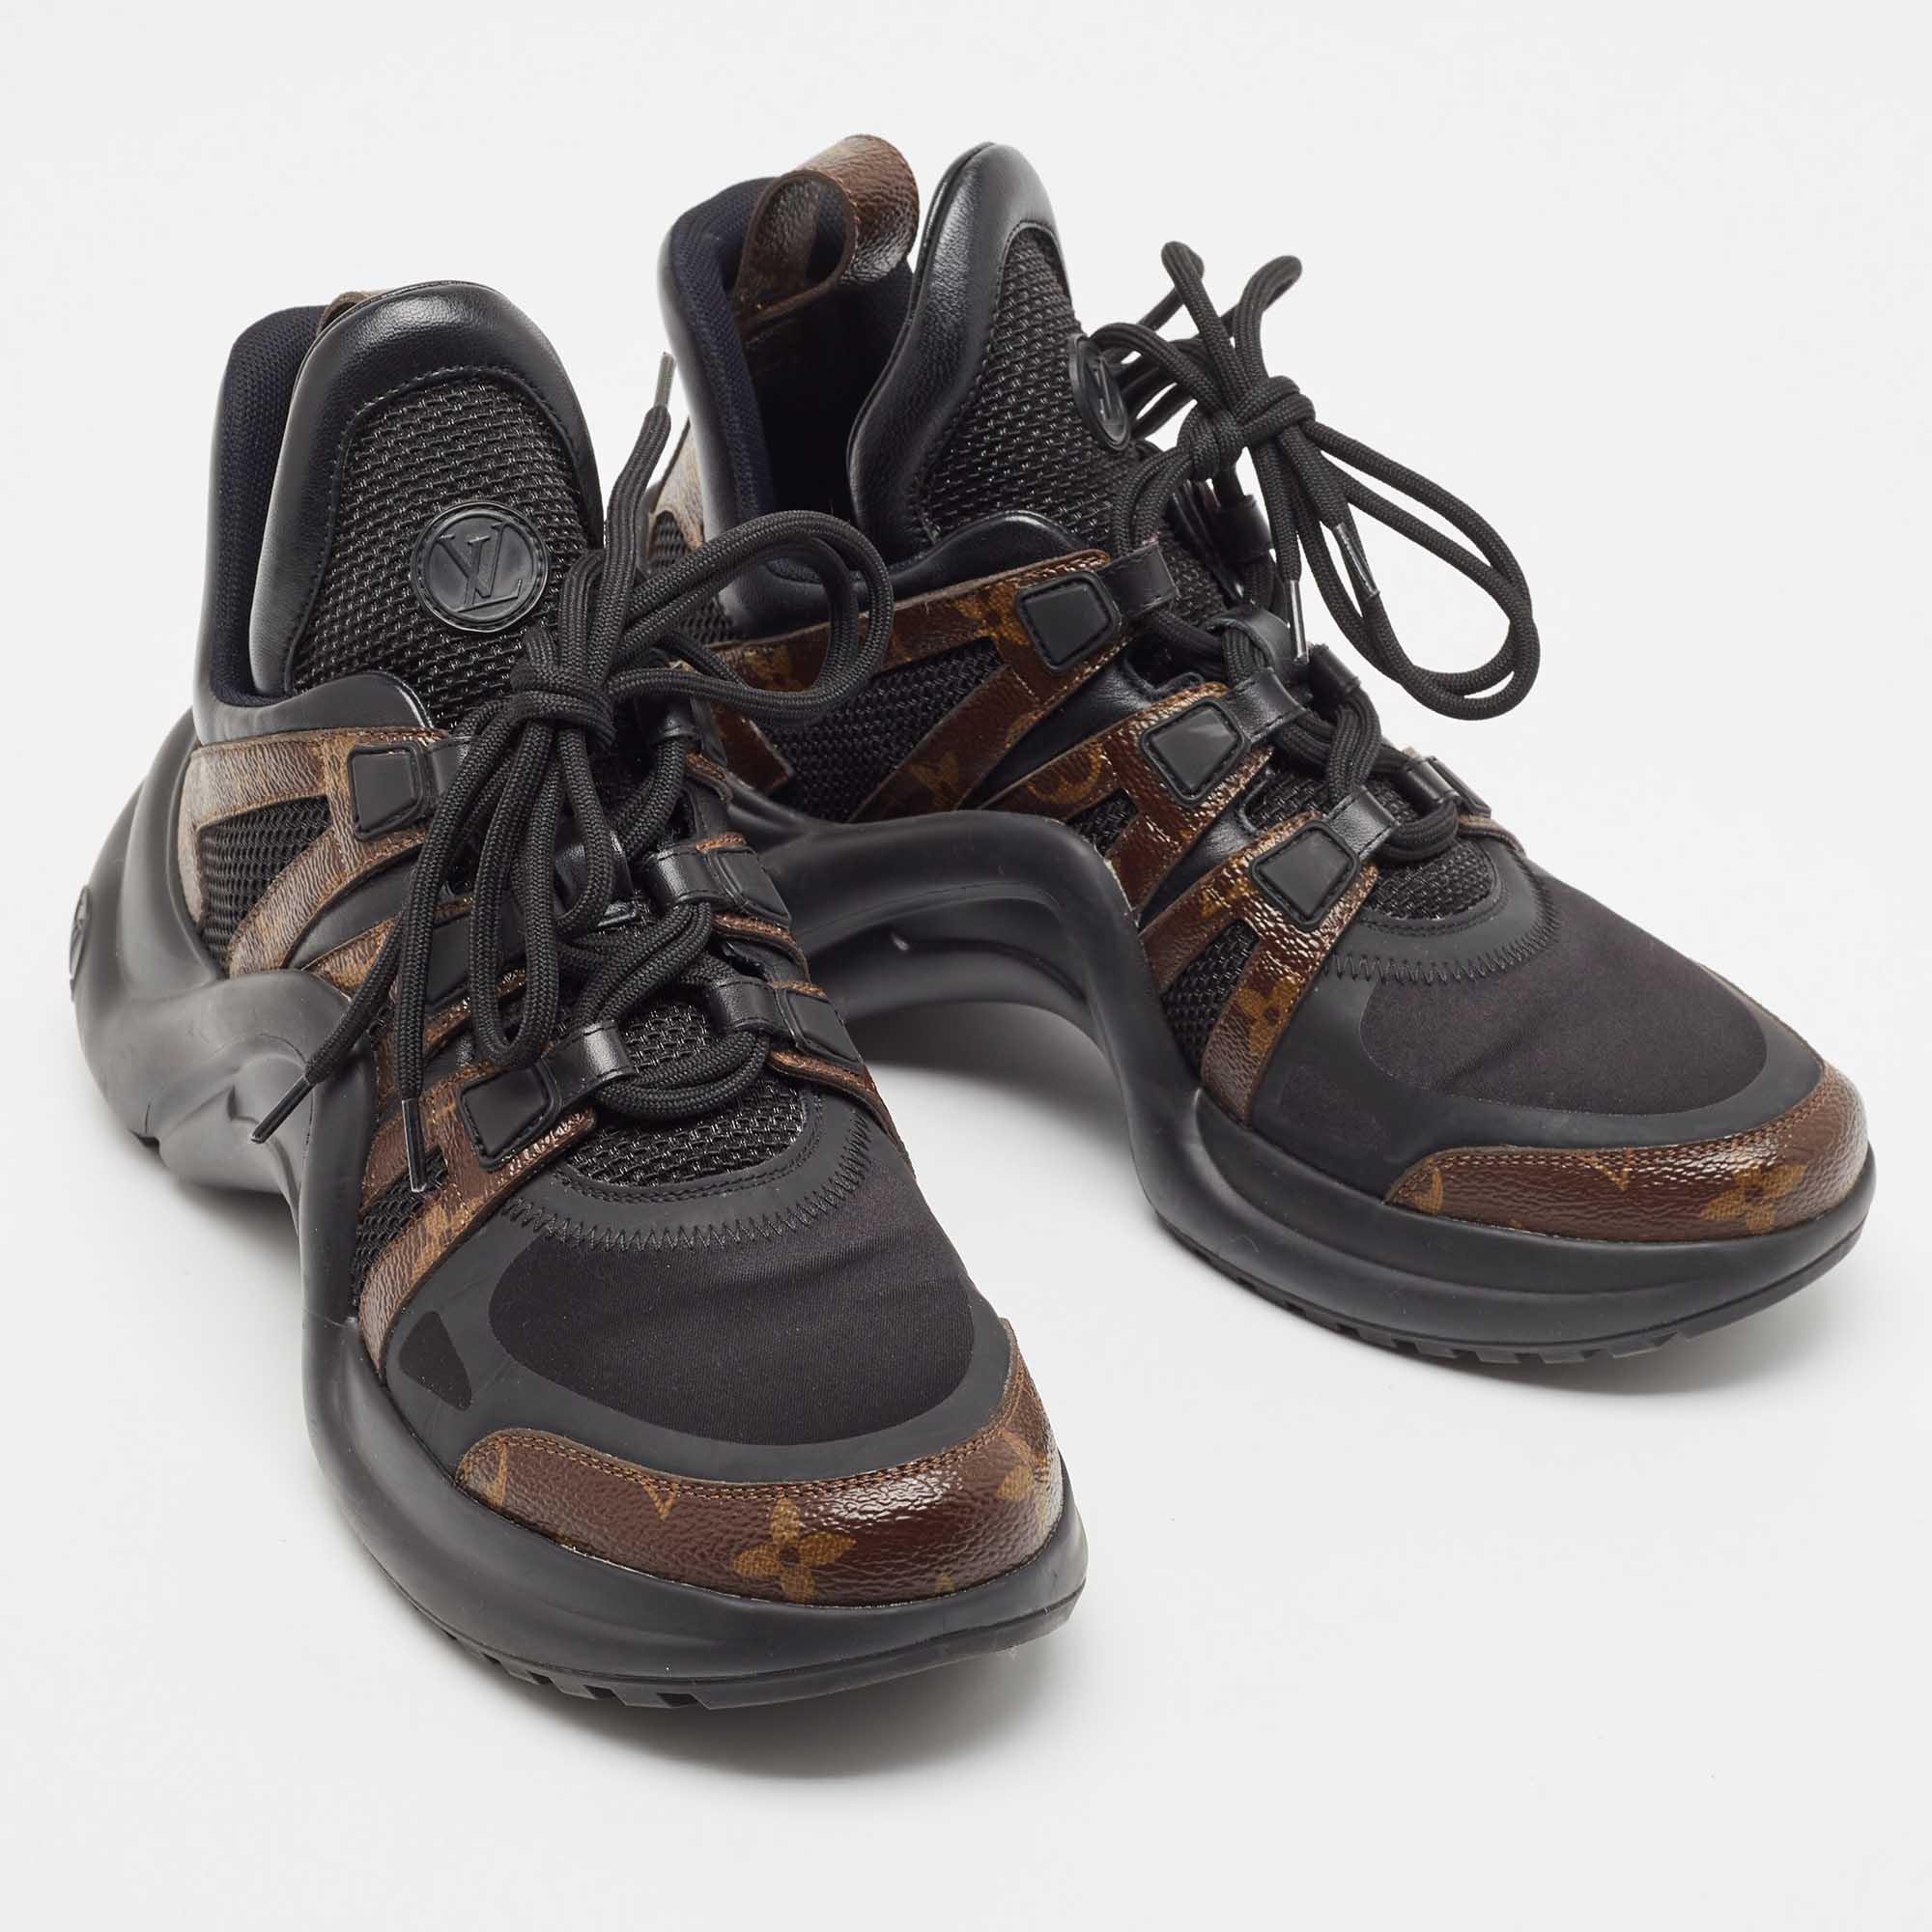 Louis Vuitton Black/Brown Nylon, Leather Archlight Sneakers Size 40